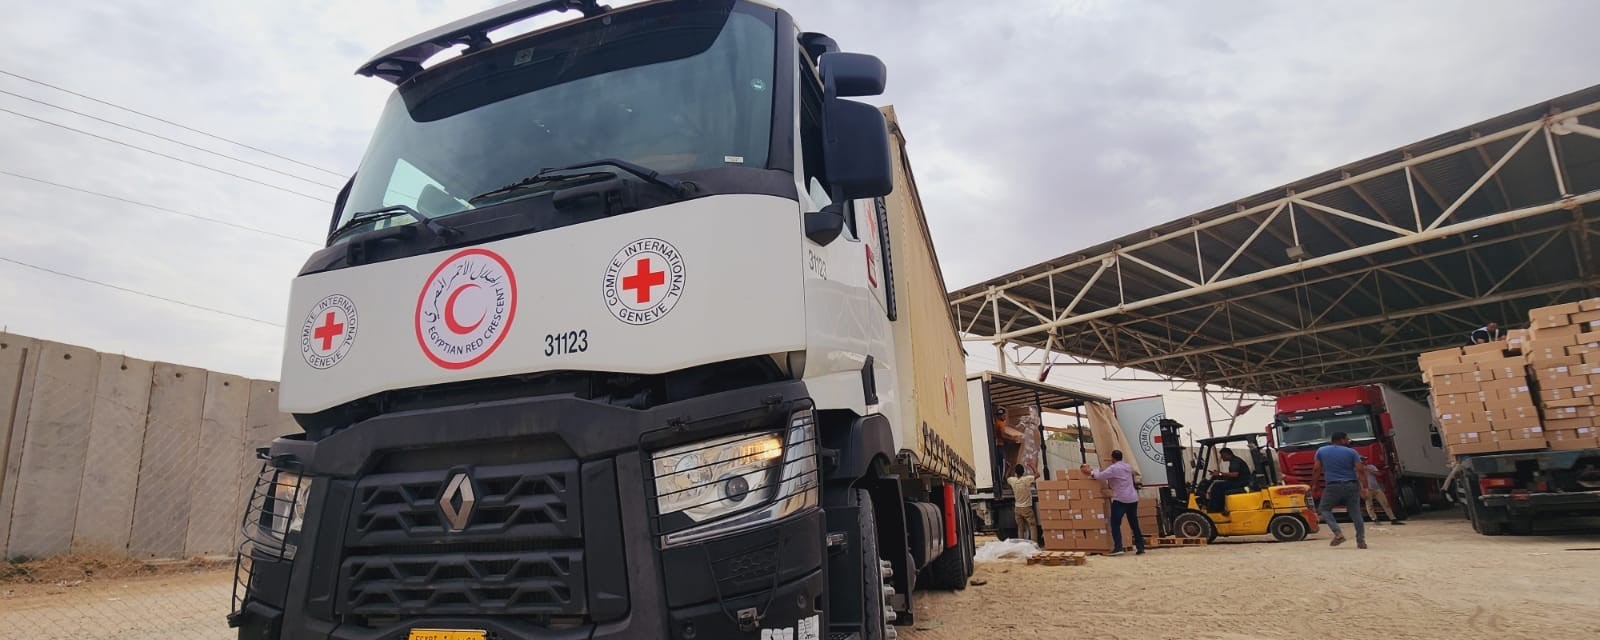 En stor hvit lastebil med emblem fra Røde Kors og Røde Halvmåne